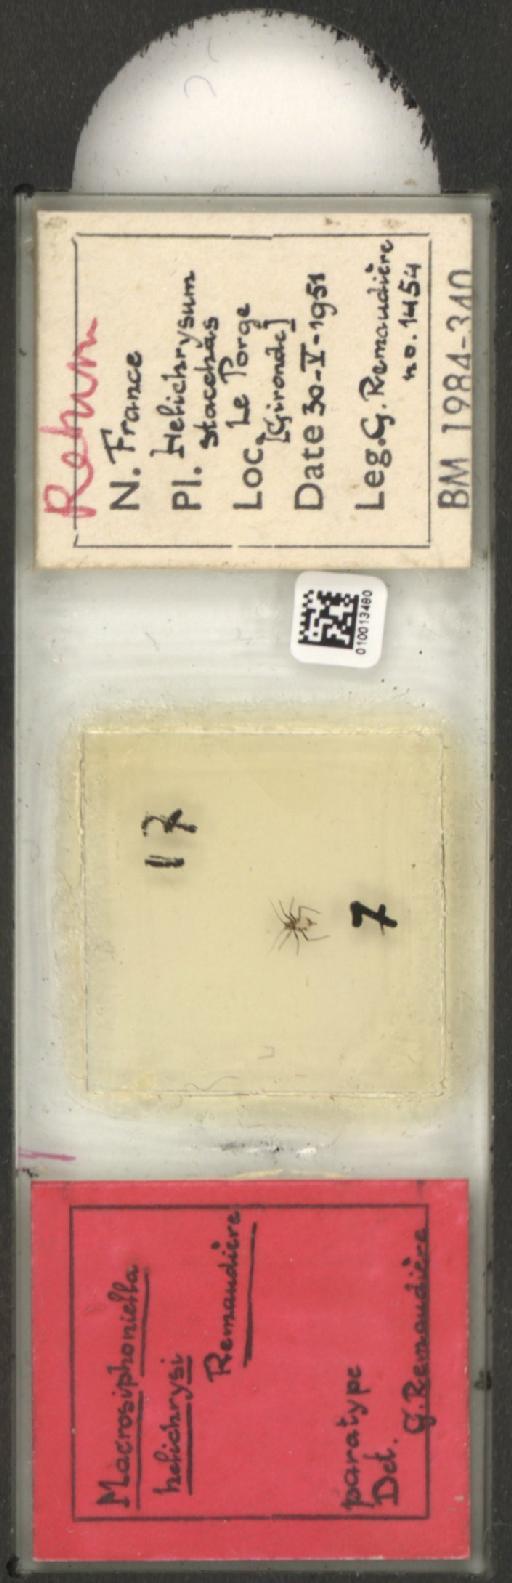 Macrosiphoniella helichrysi Remaudiere, 1952 - 010013480_112660_1094725